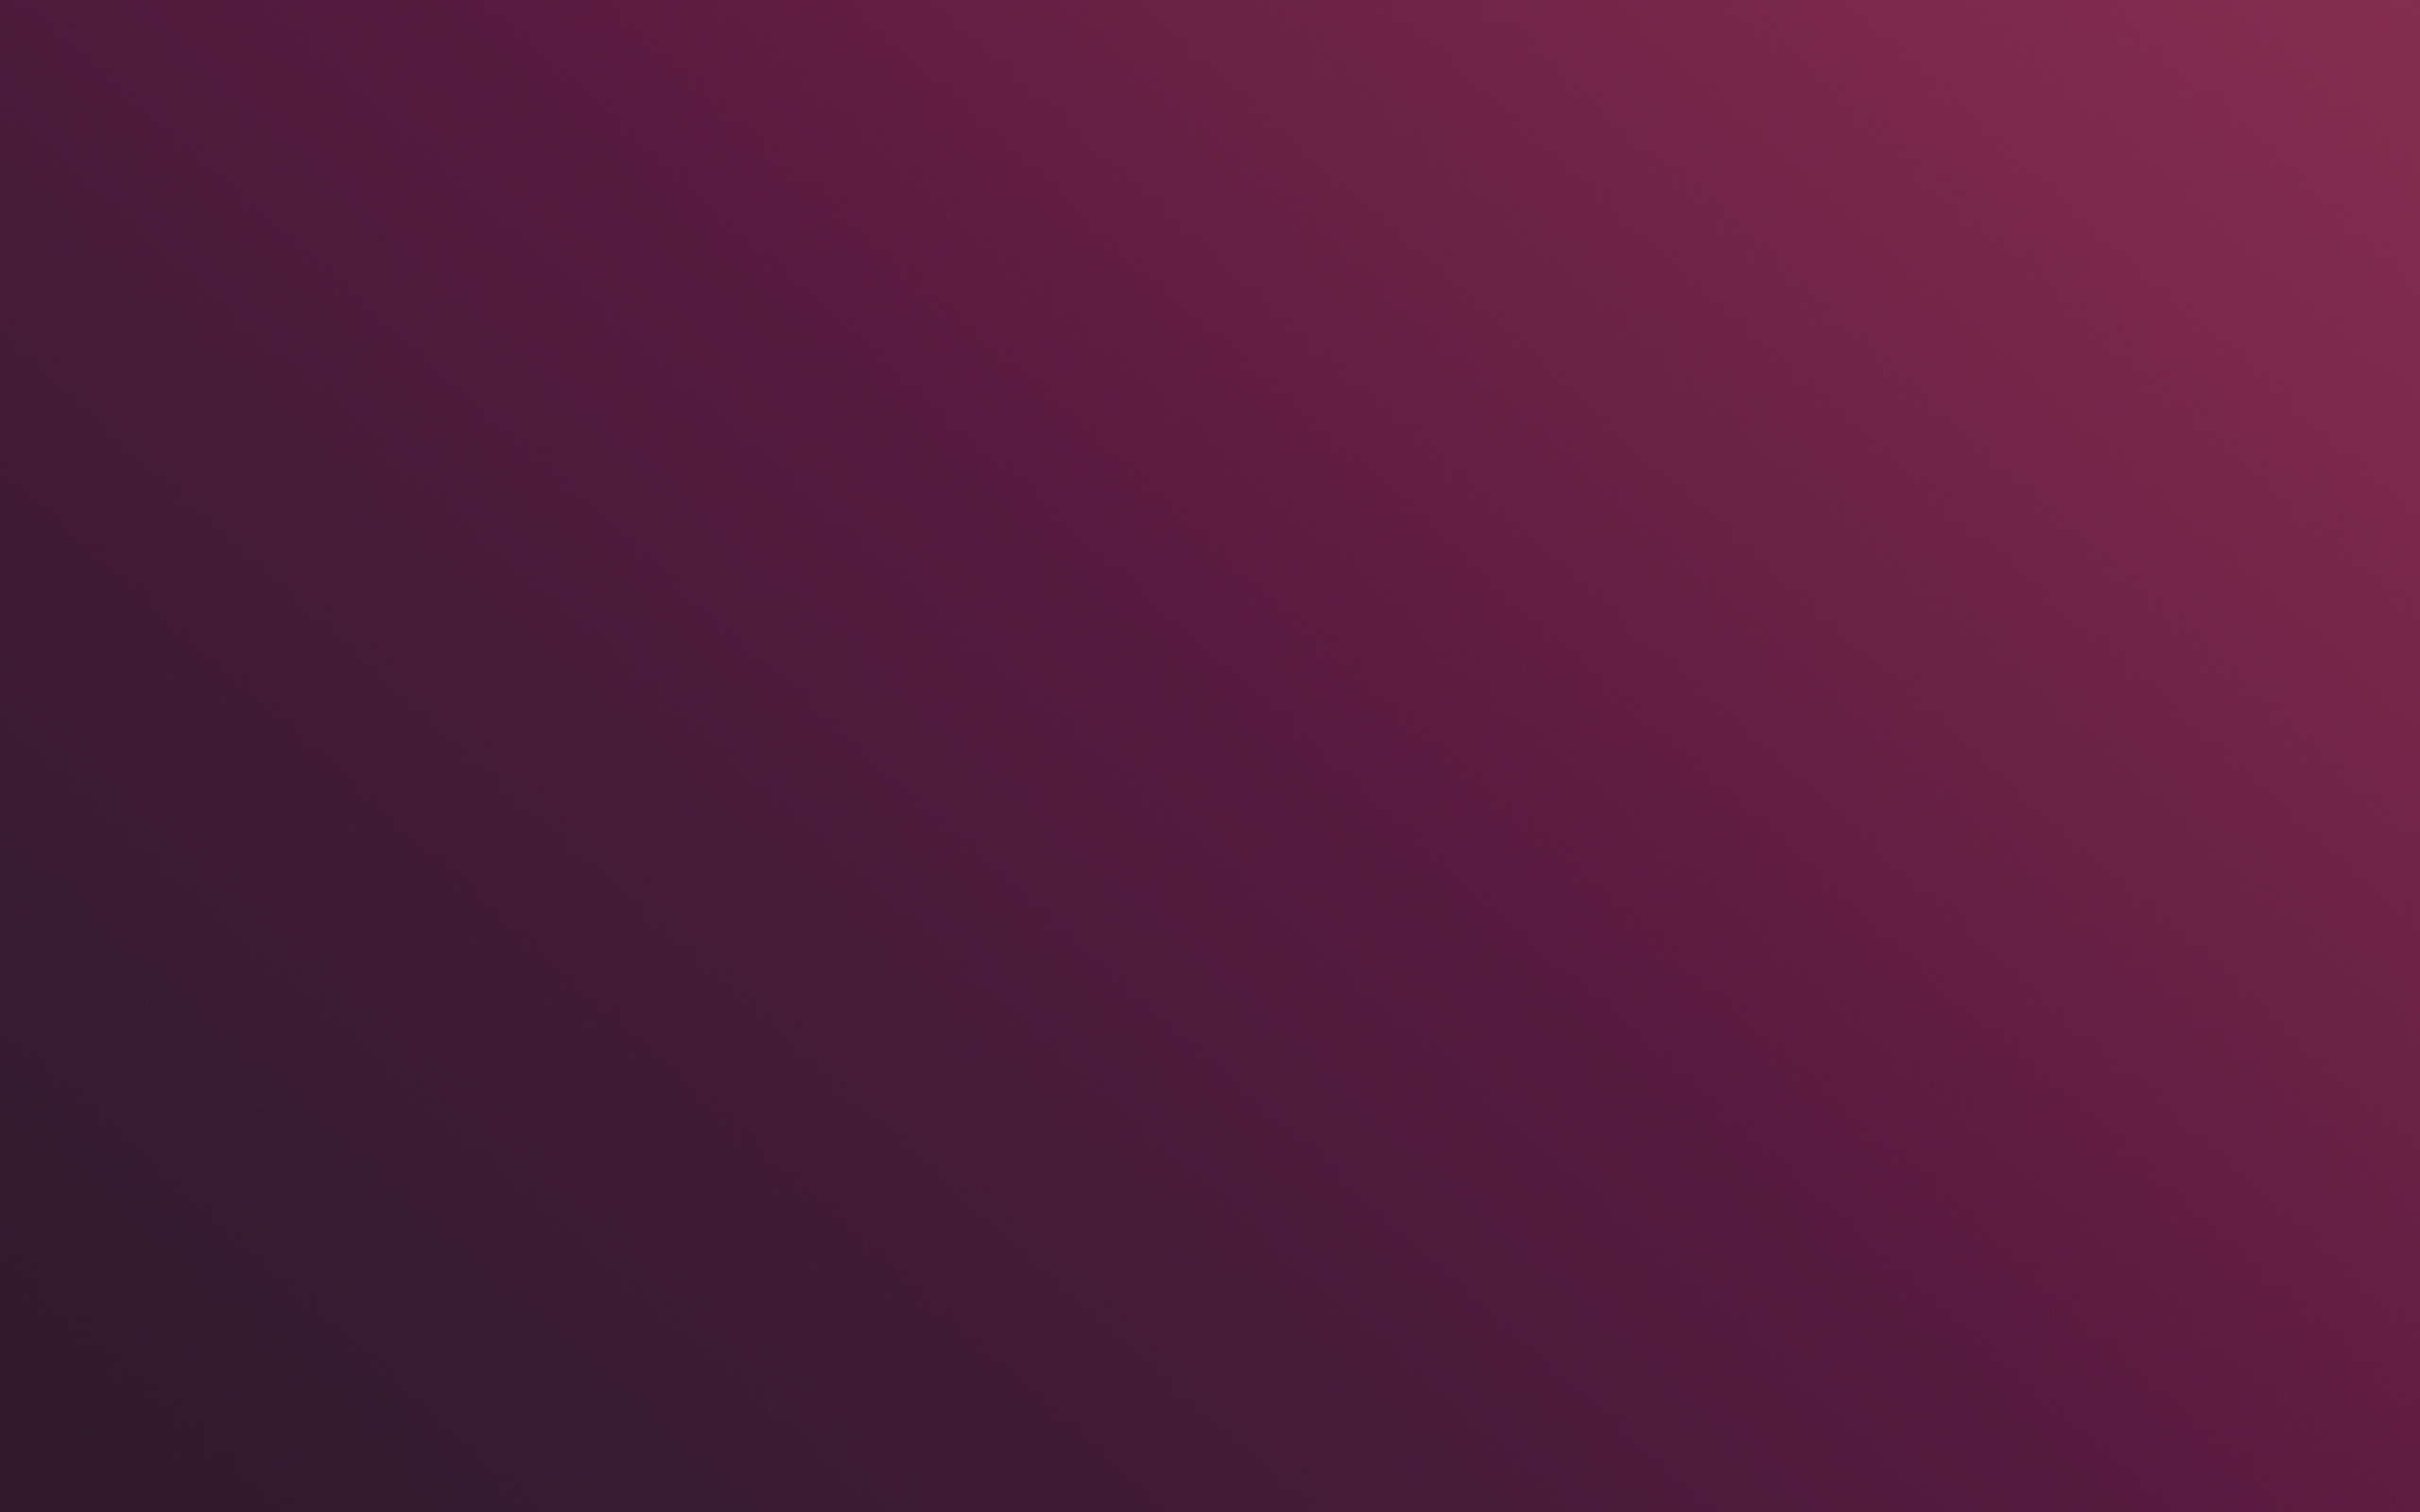 Ubuntu wallpaper 2560x1600